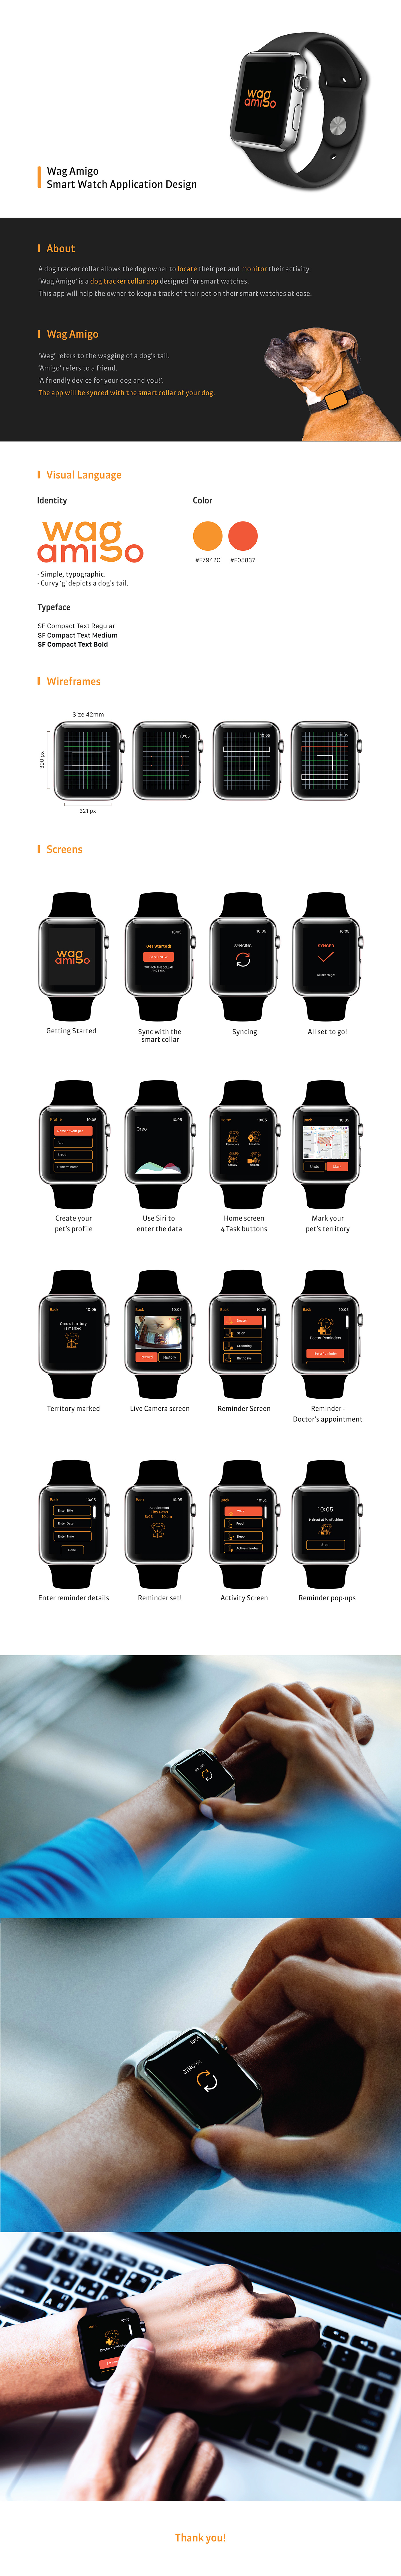 smart watch iwatch app design Wag Amigo Dog trackers Smart collar tracker ui ux smart watch app